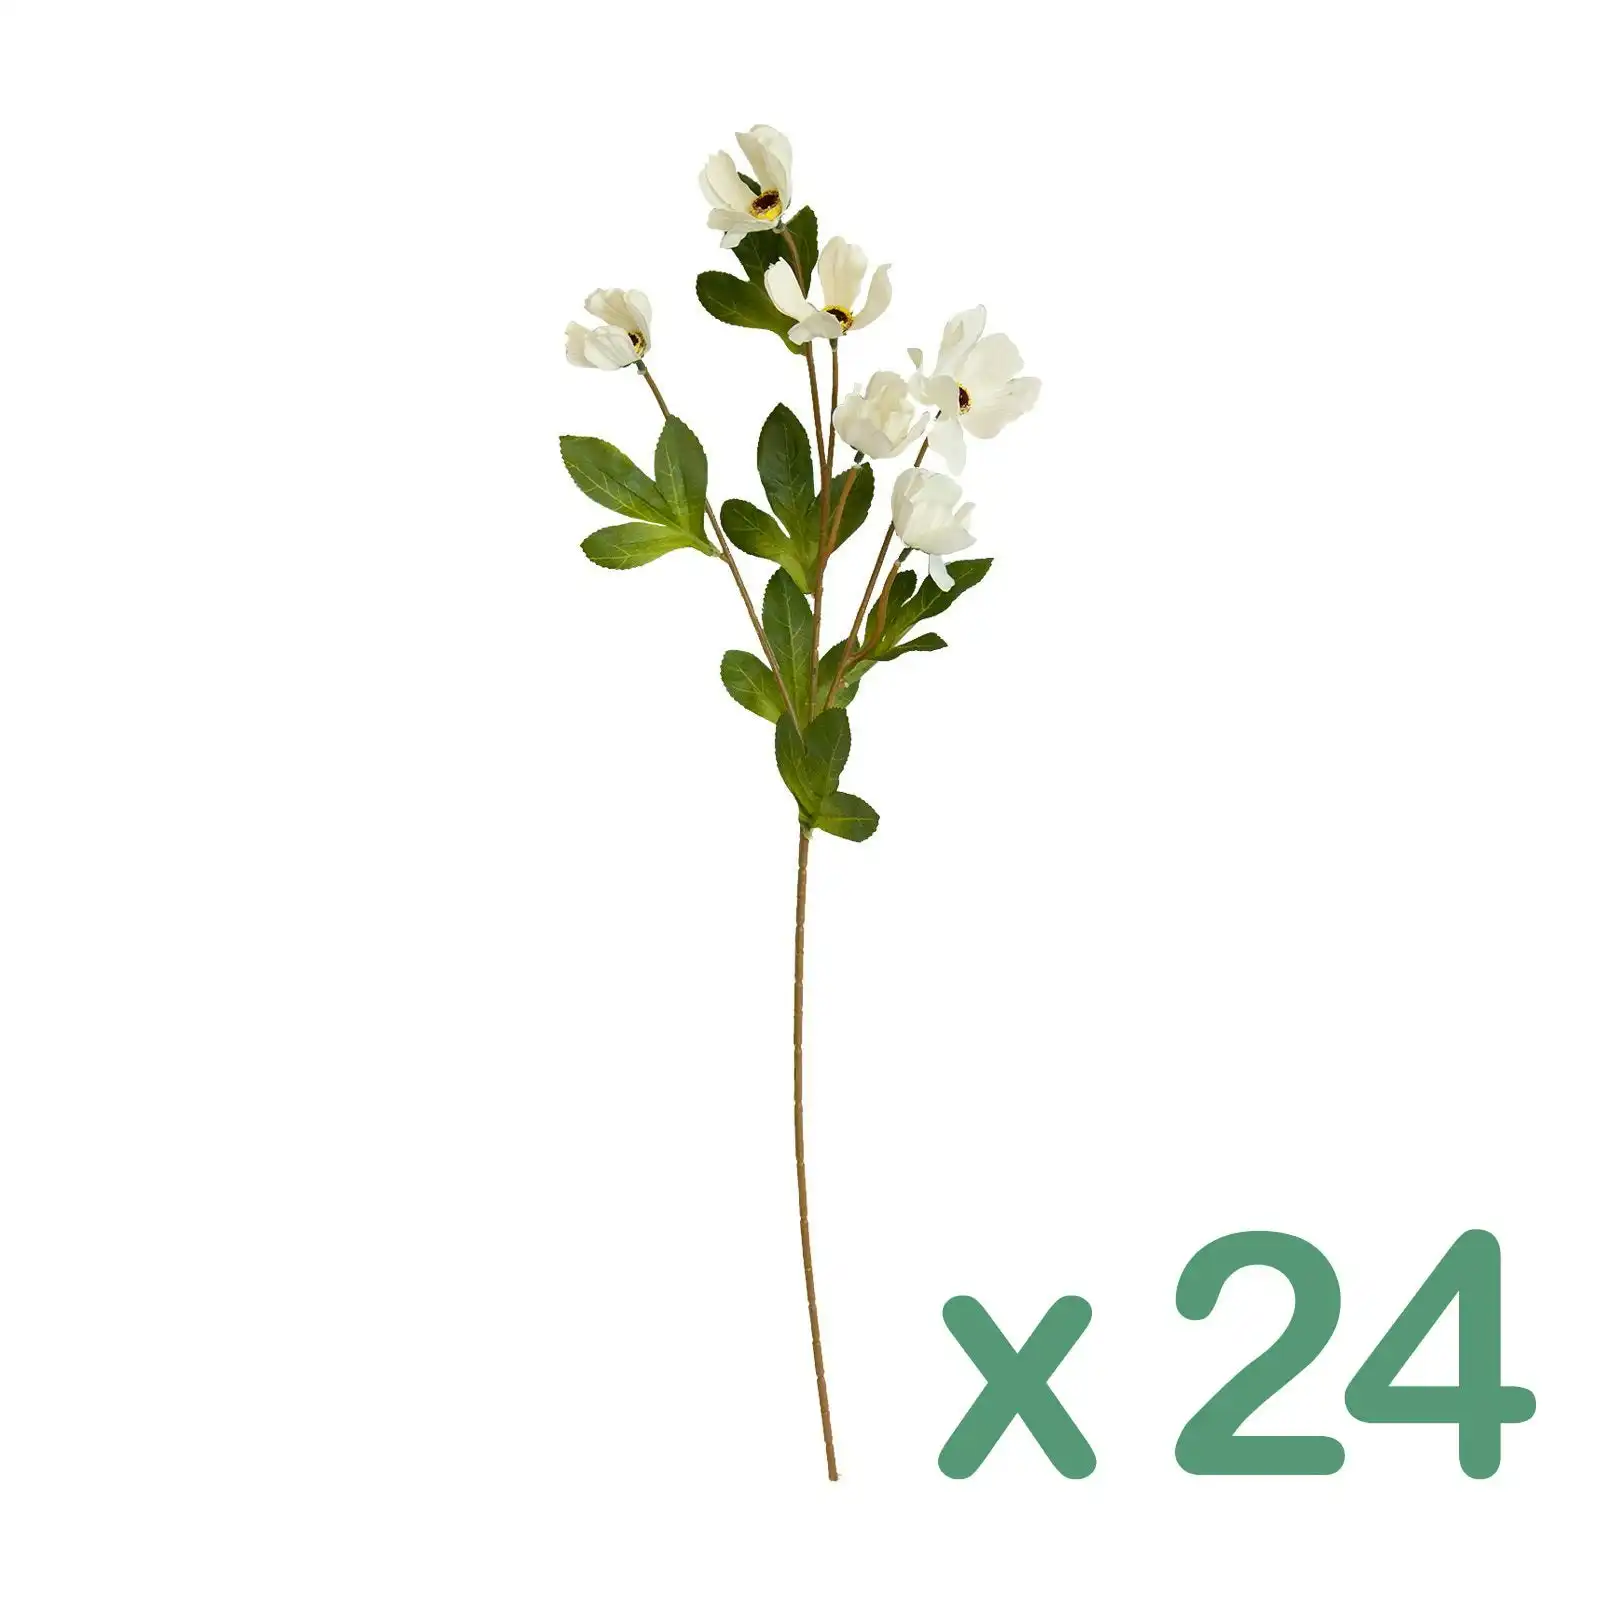 Carton of 24 - Artificial Flowers - Wild Poppy White 60cm